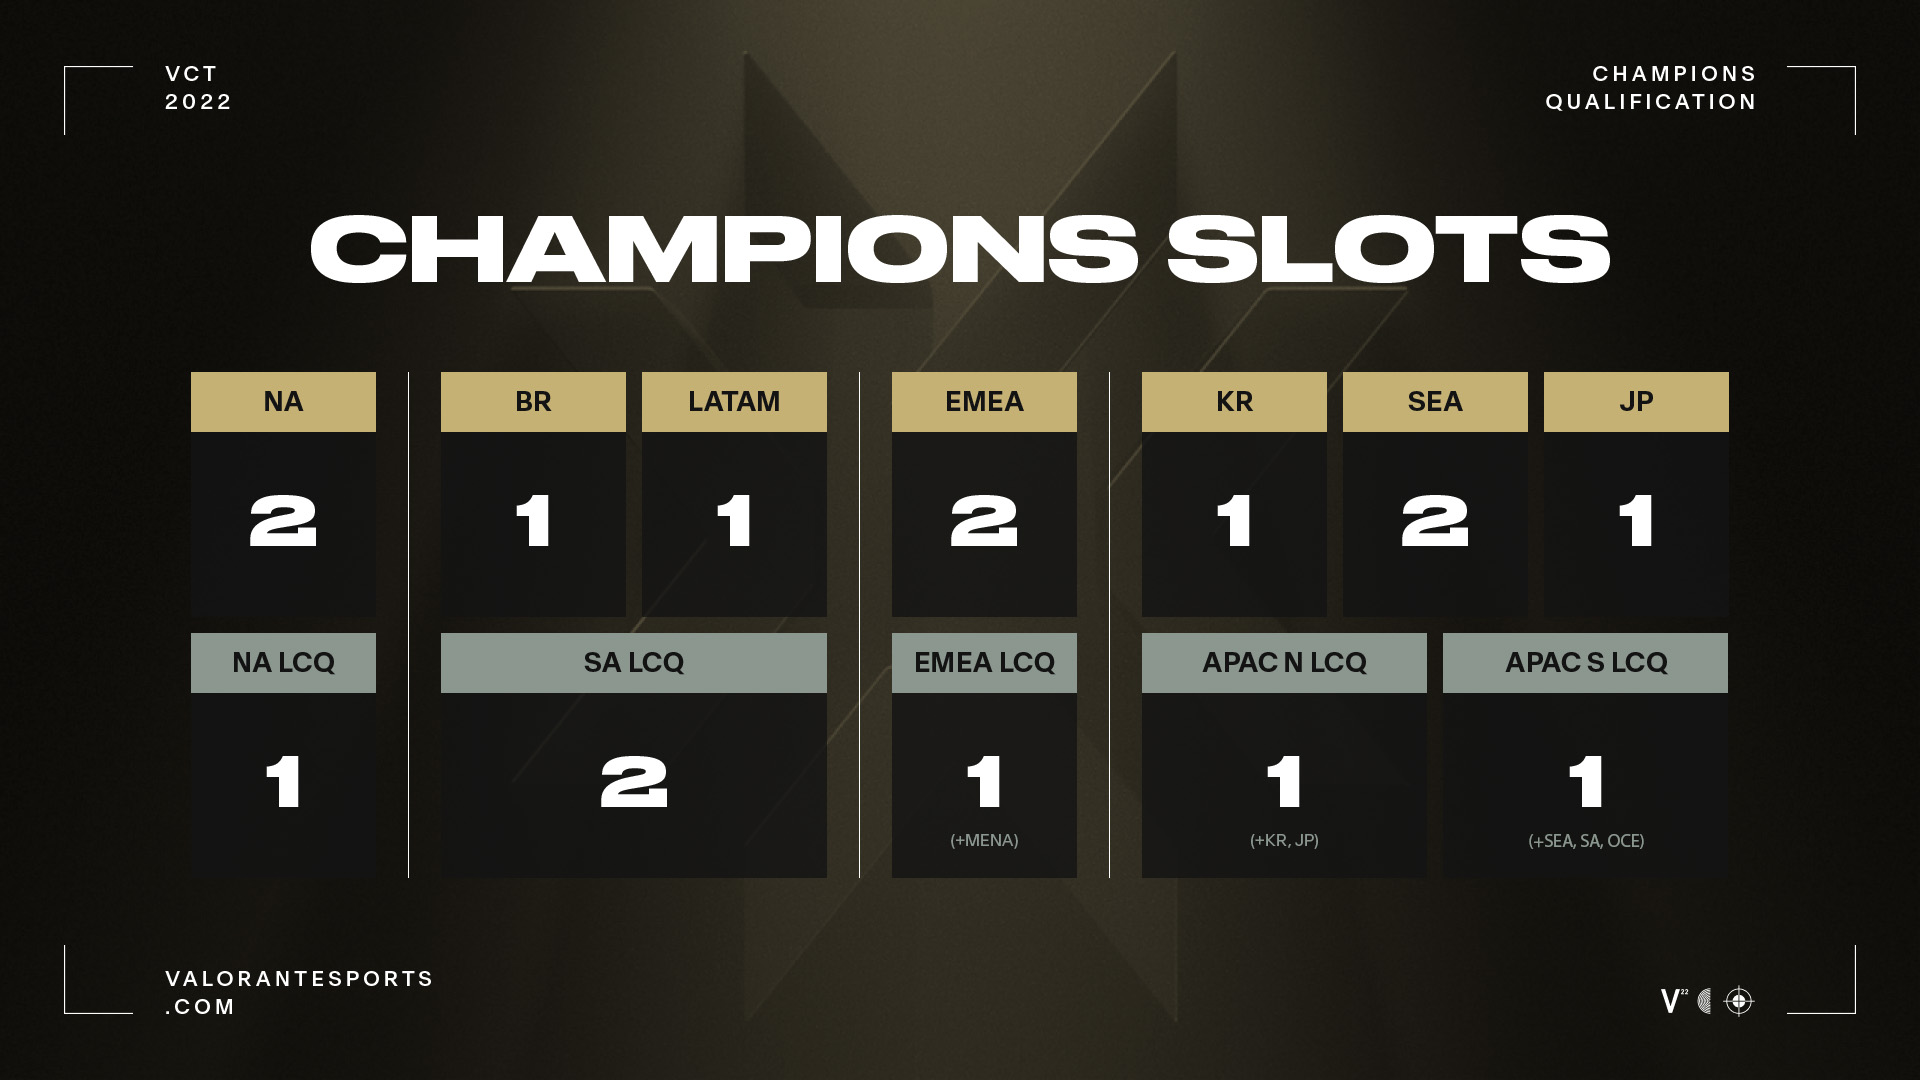 05_Champions_Slots_v2.0.jpg